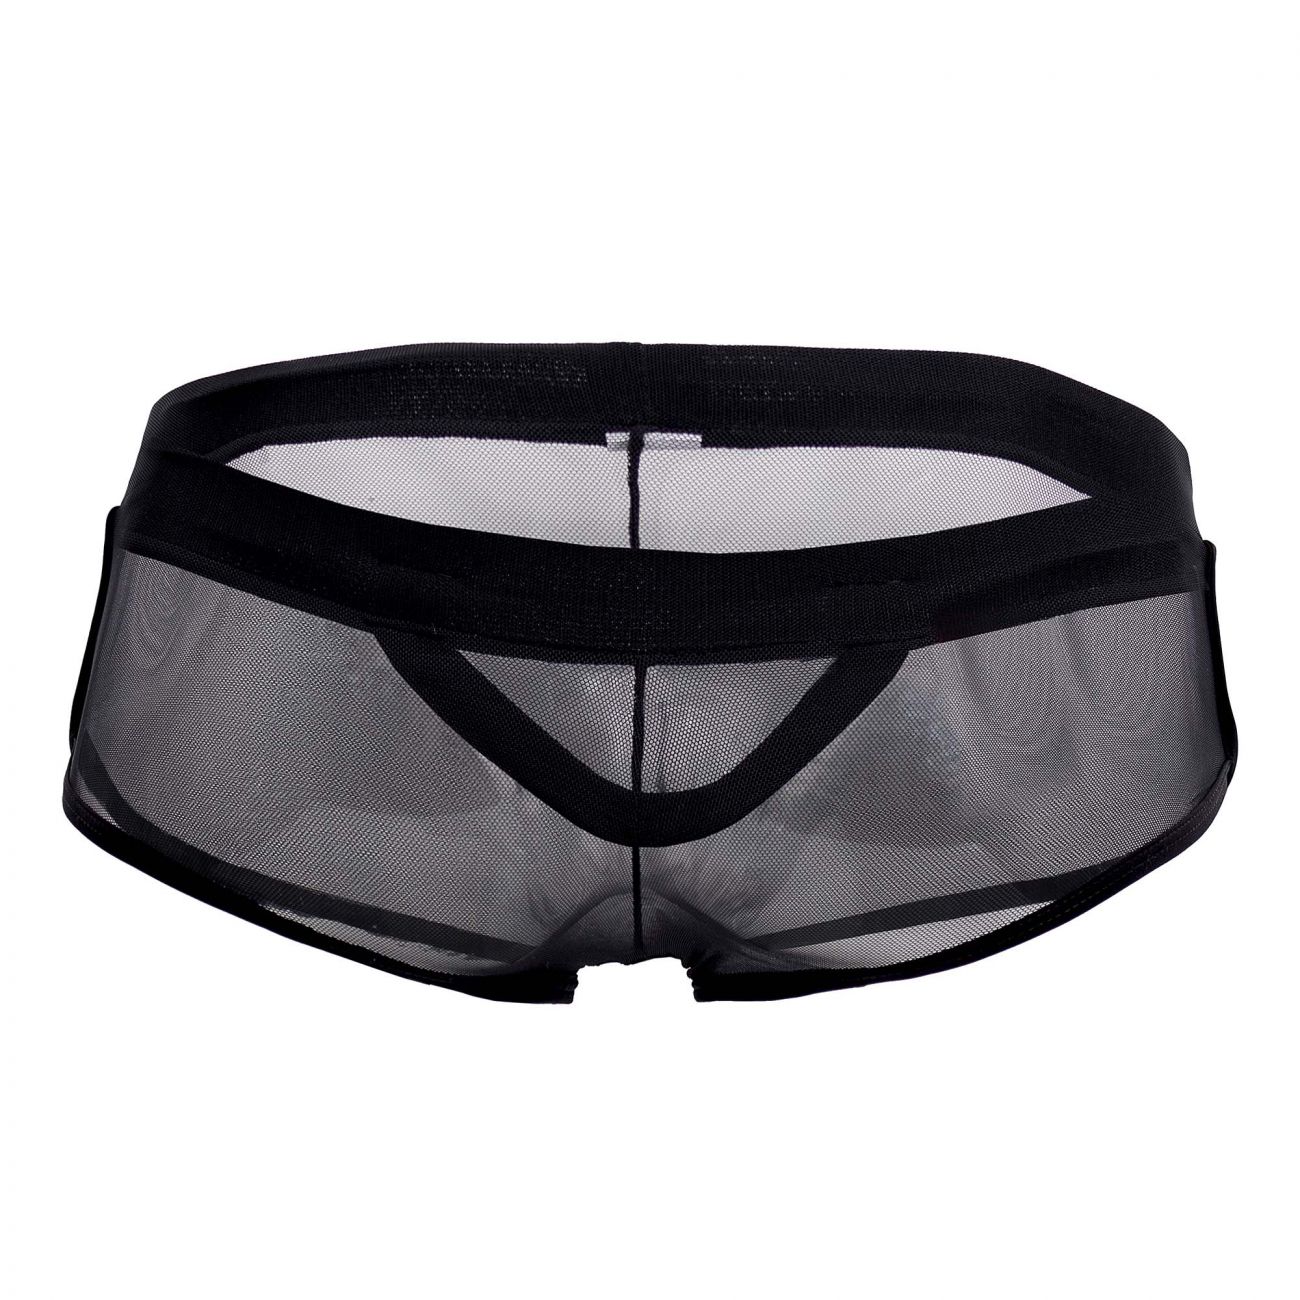 Mens Underwear: Pikante 0226 Chekke Lifter Trunks | eBay